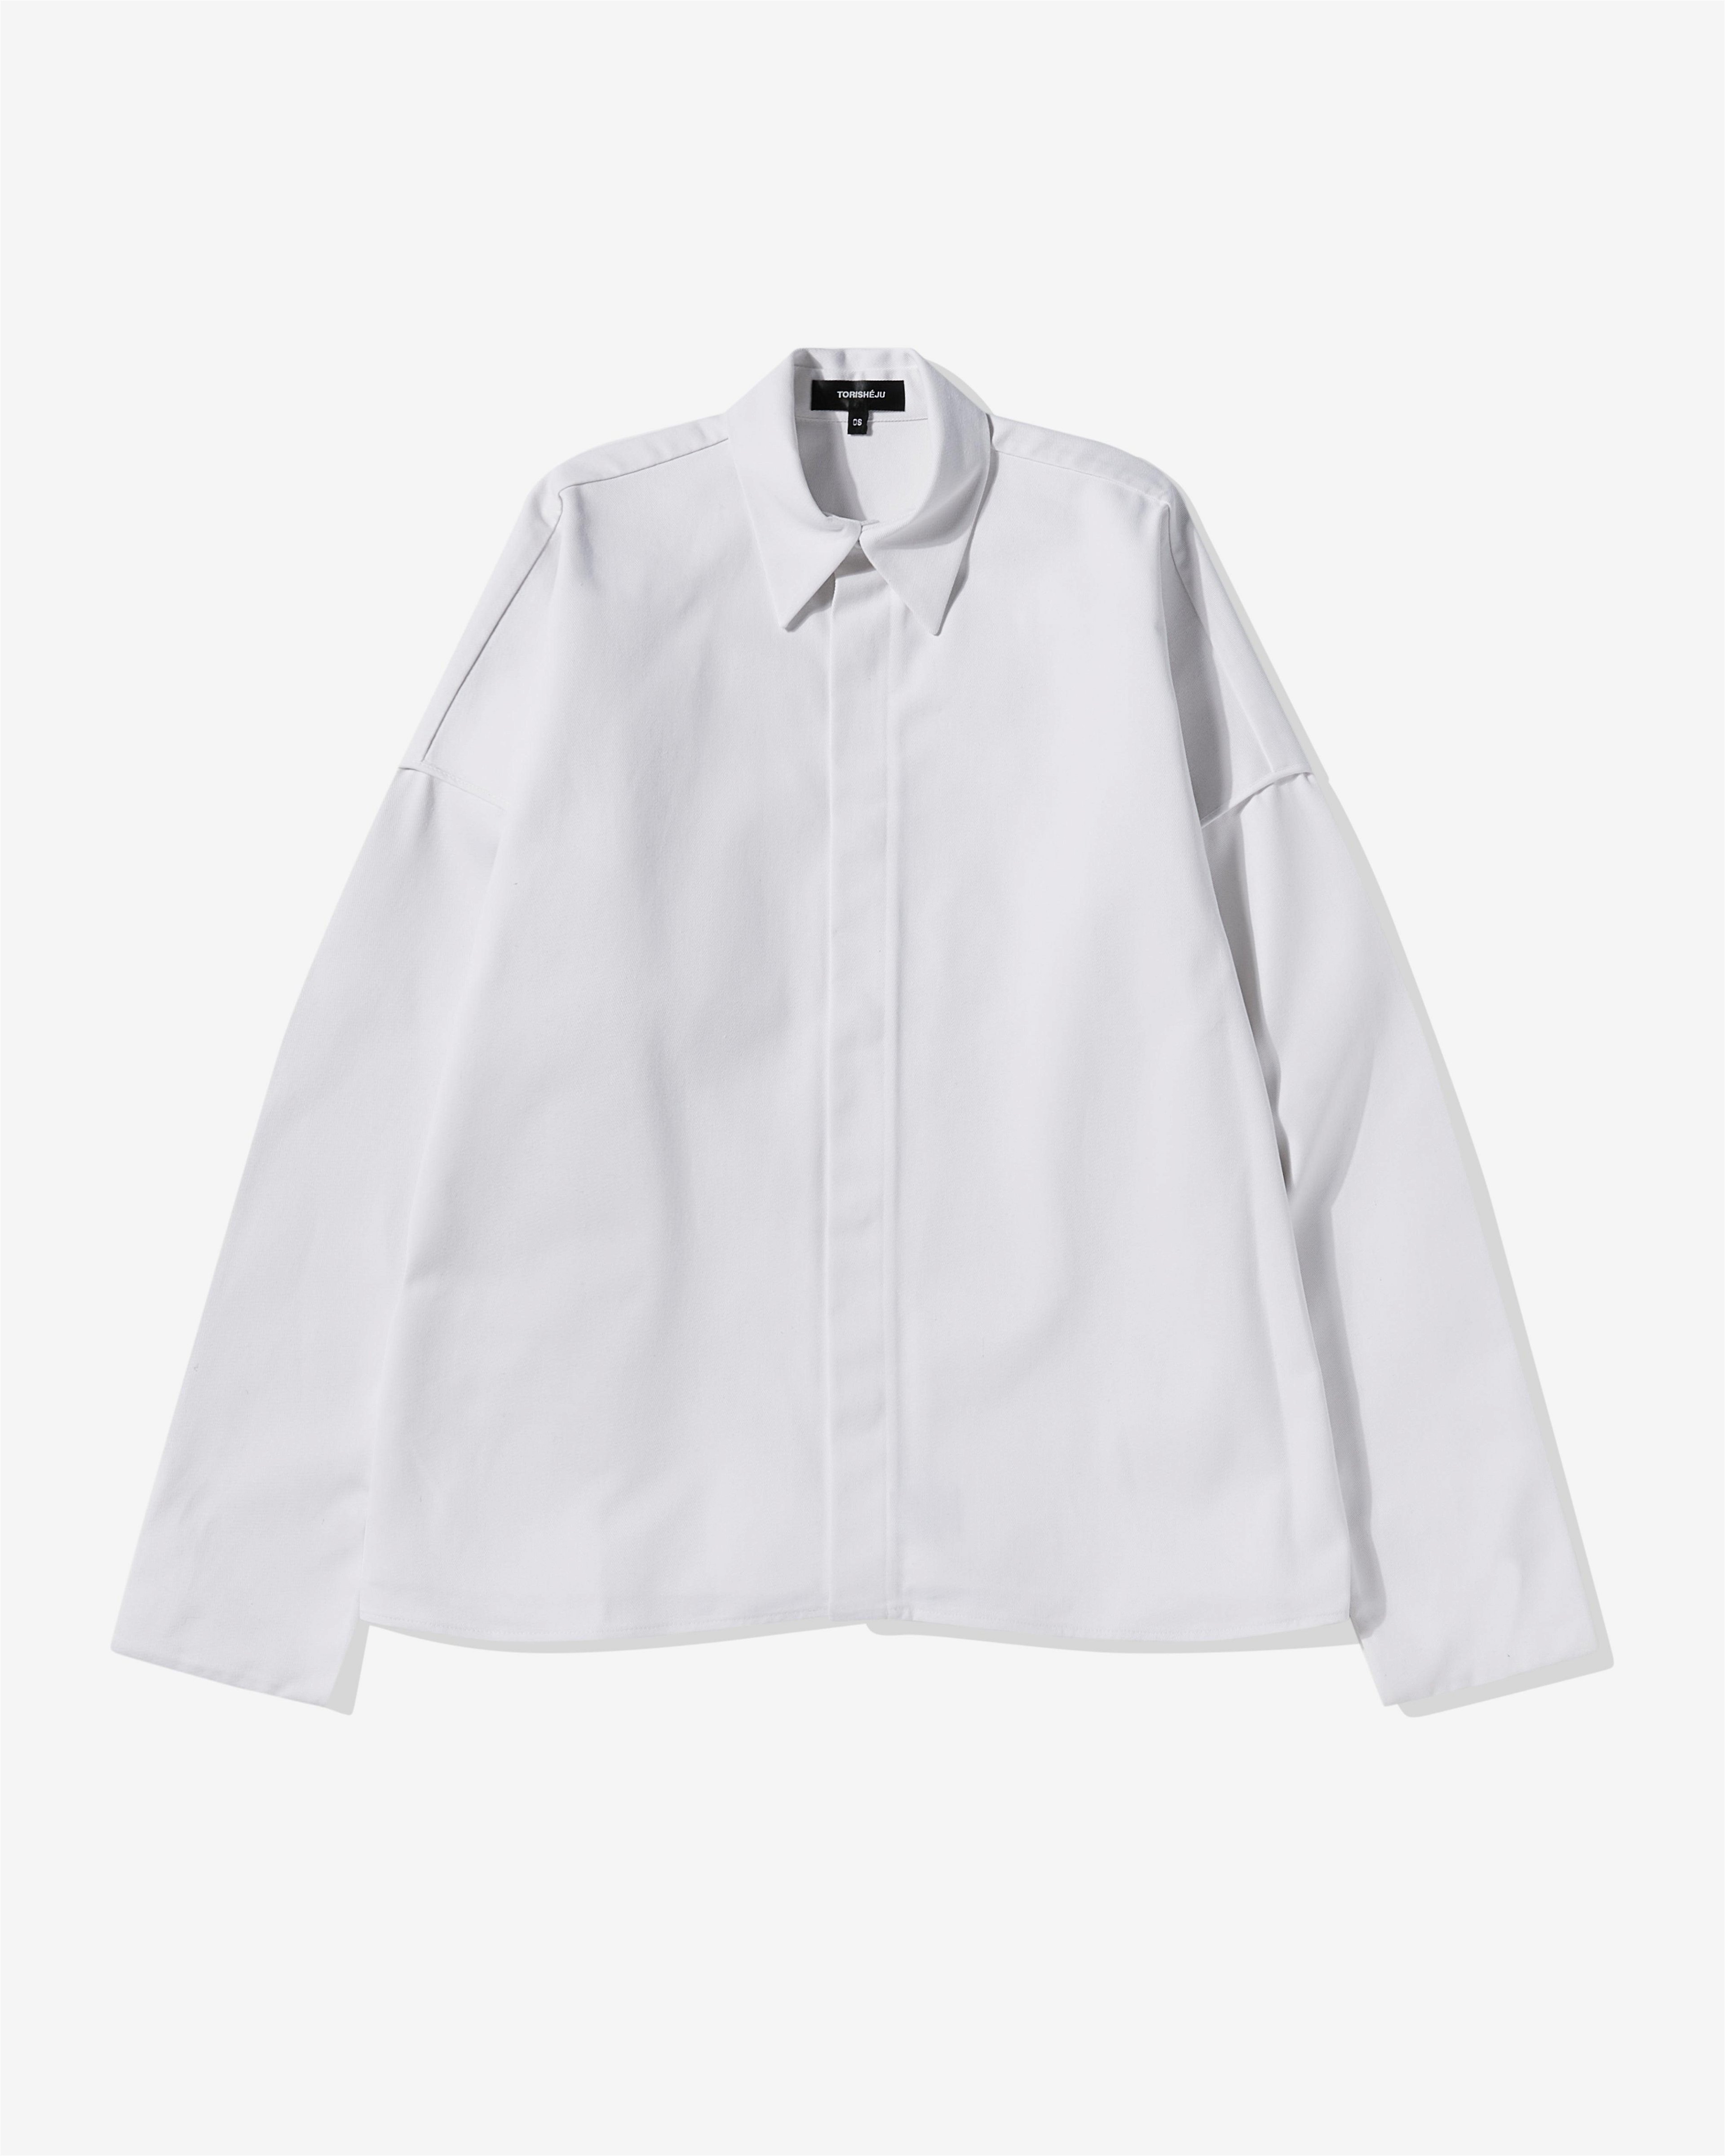 Torisheju - Women's Square Long Sleeve Tye Shirt - (White) by TORISHEJU